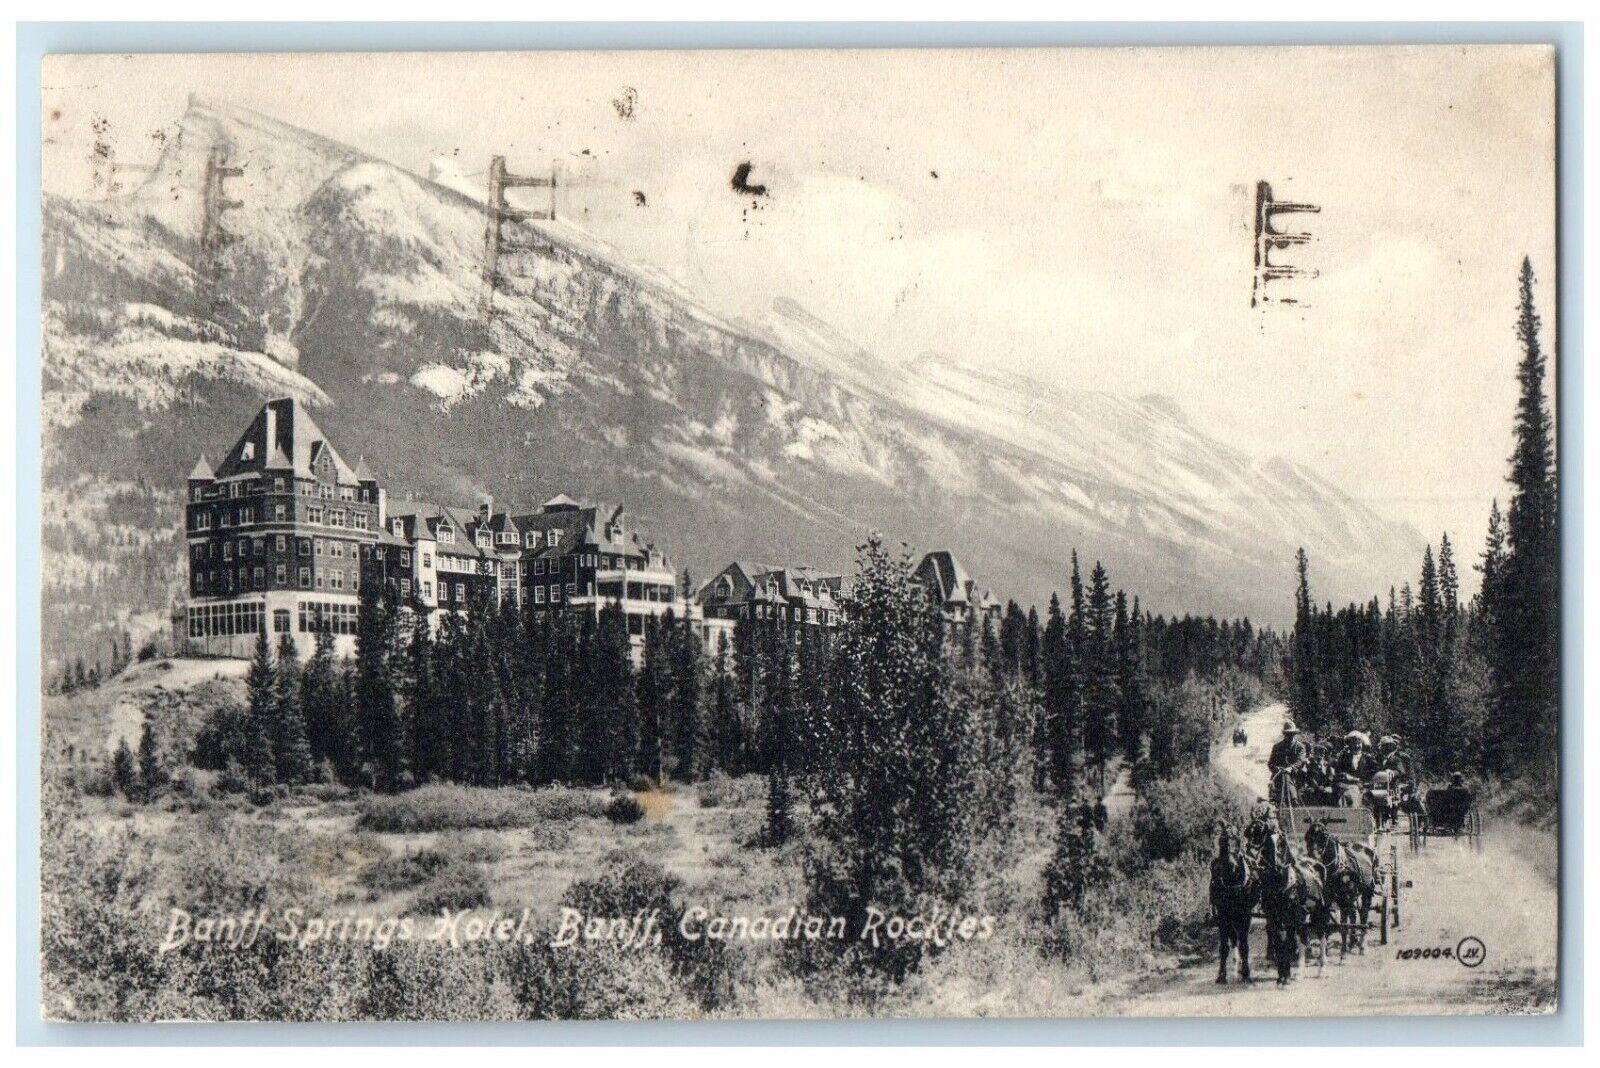 1914 Banff Springs Hotel Banff Canadian Rockies Alberta Canada Posted Postcard